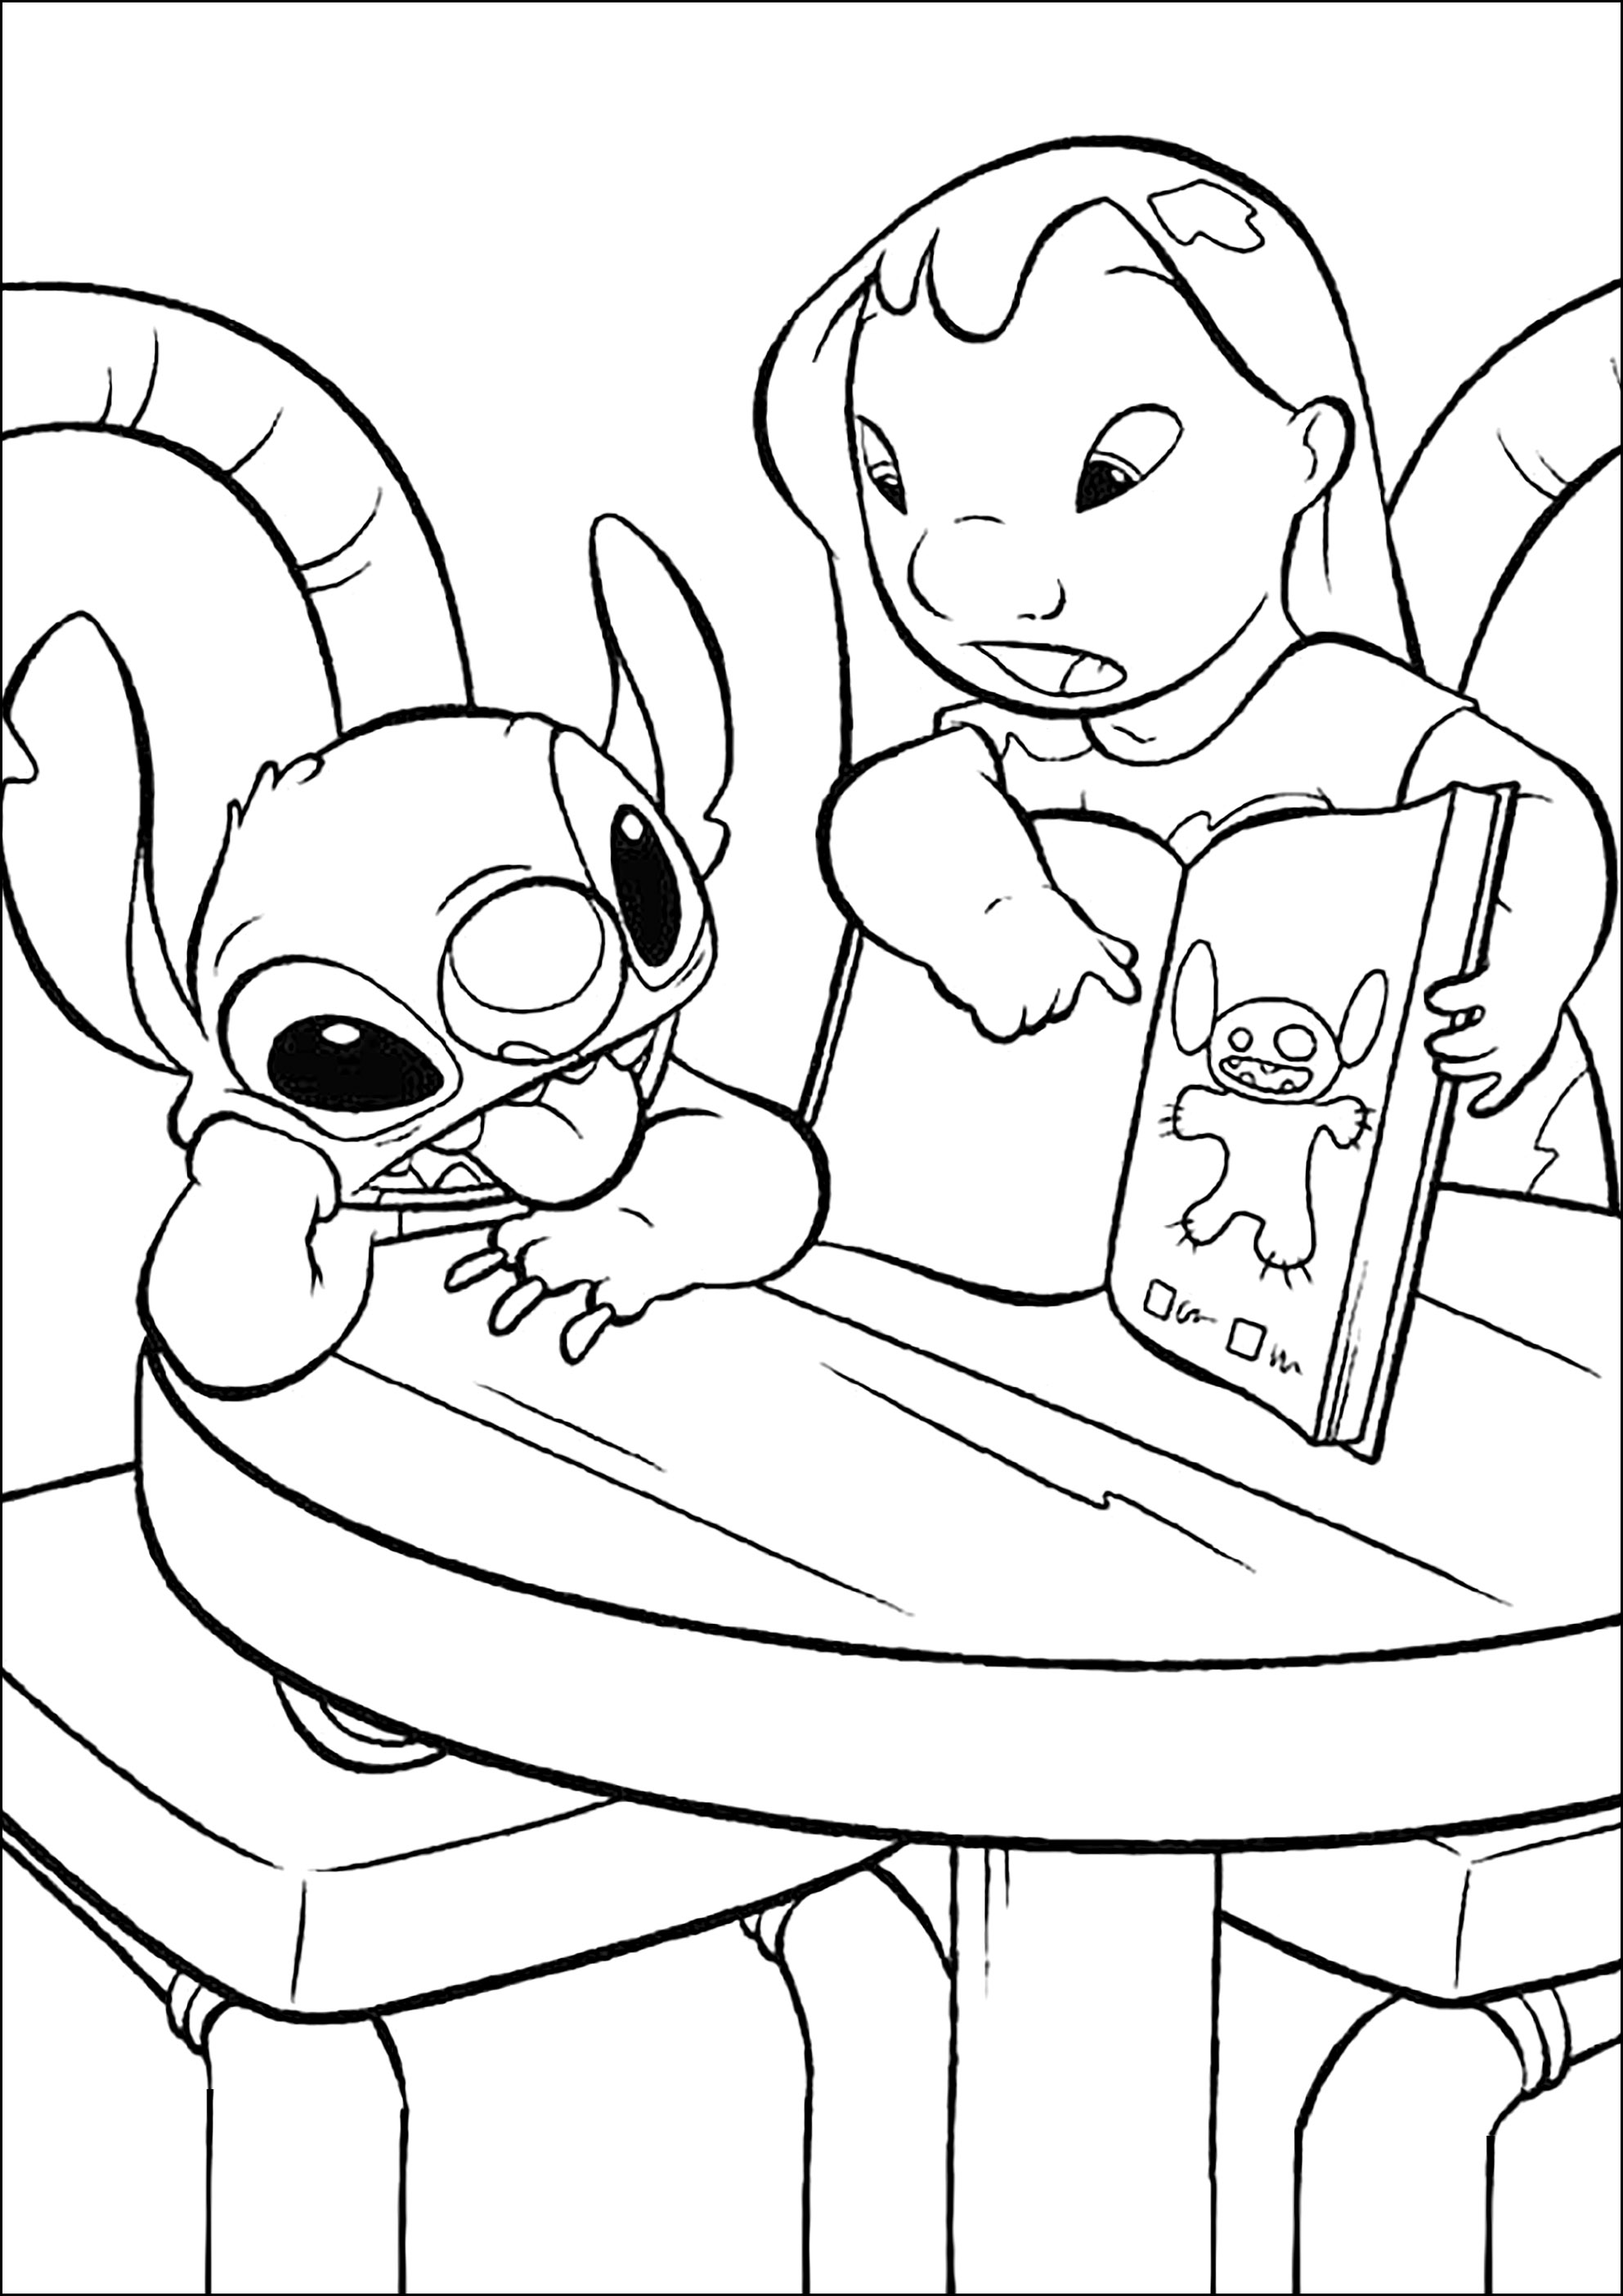 Lilo et Stitch (Disney) : la leçon de Lilo